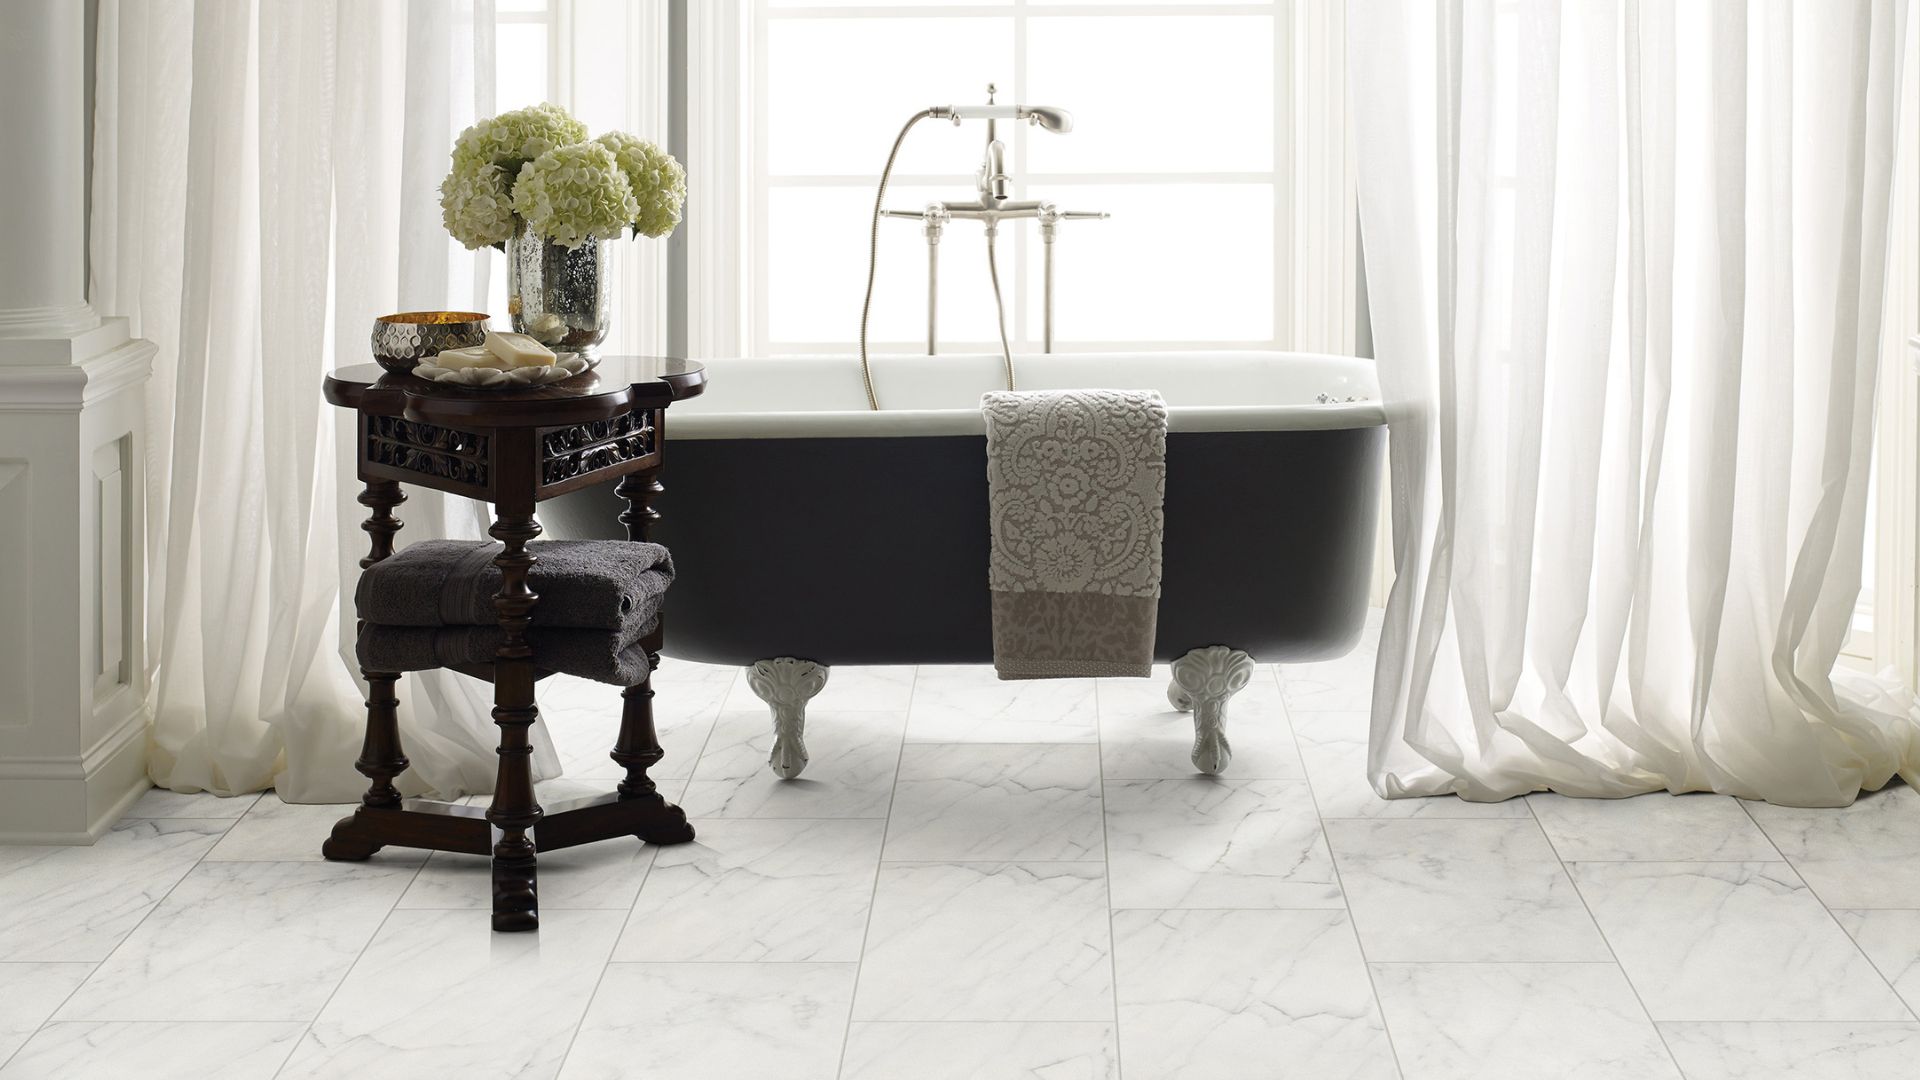 bright white bathroom tile flooring and standalone tub